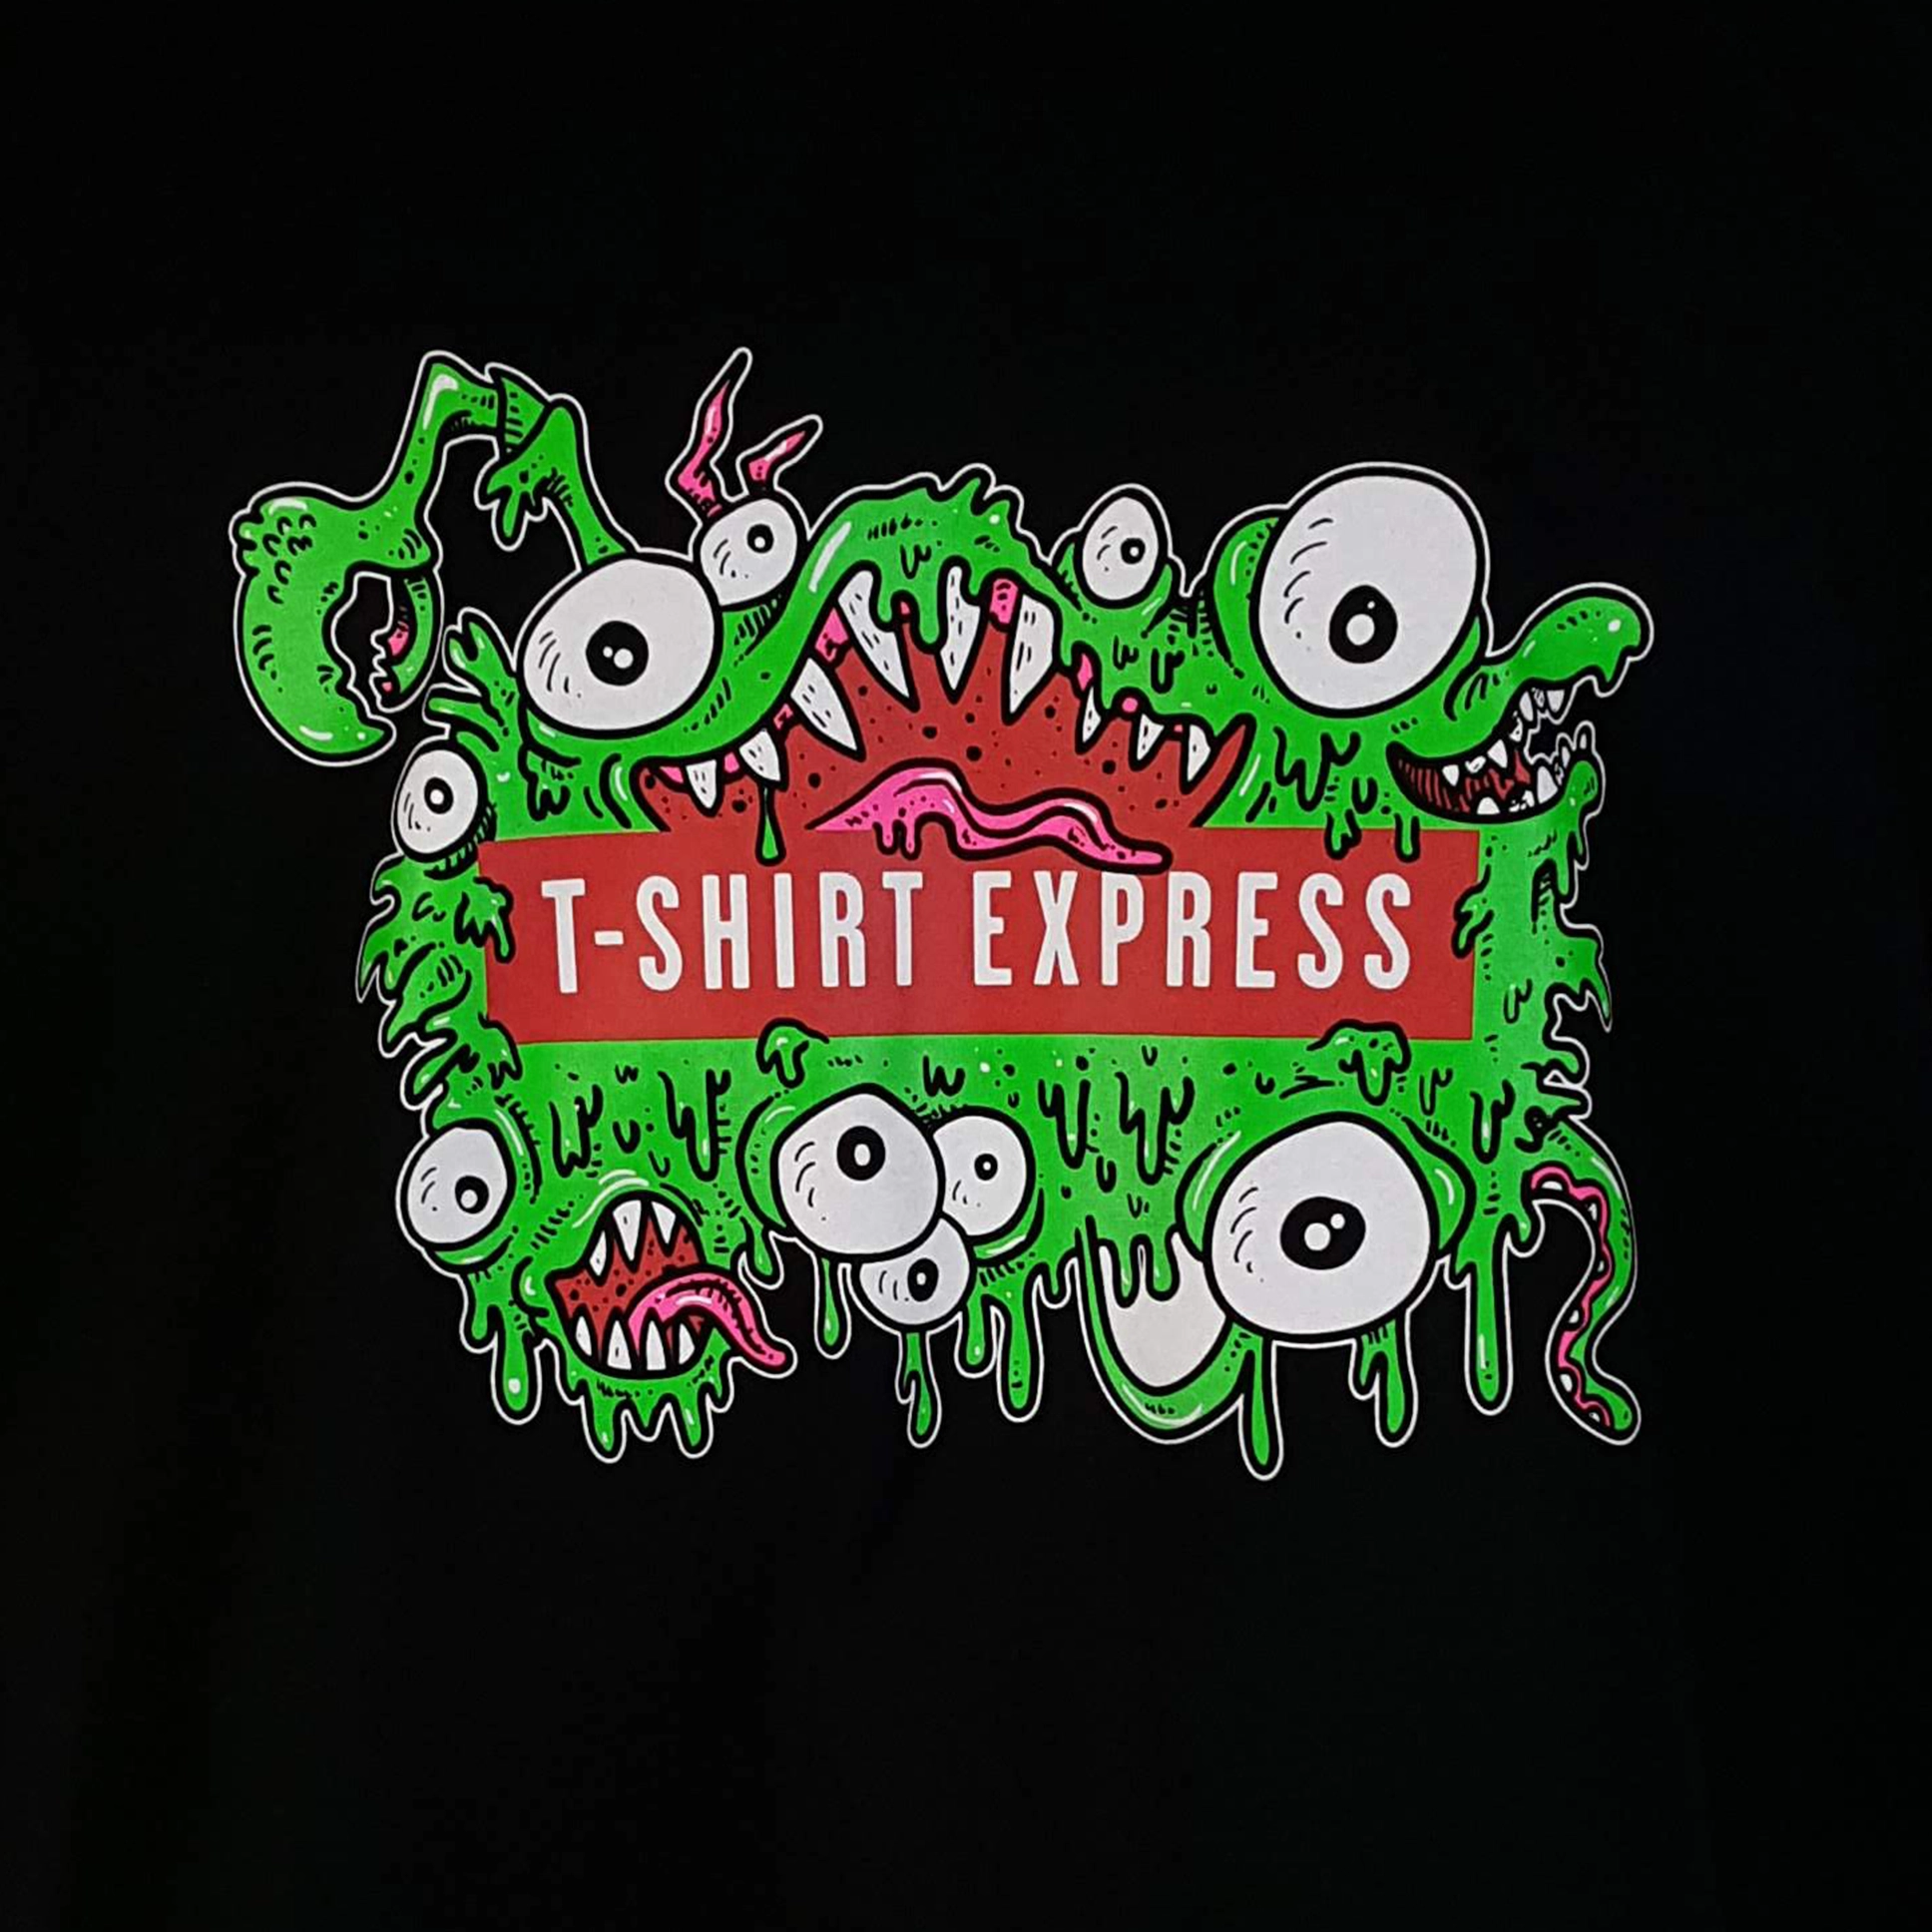 t-shirt express in Boston ohio